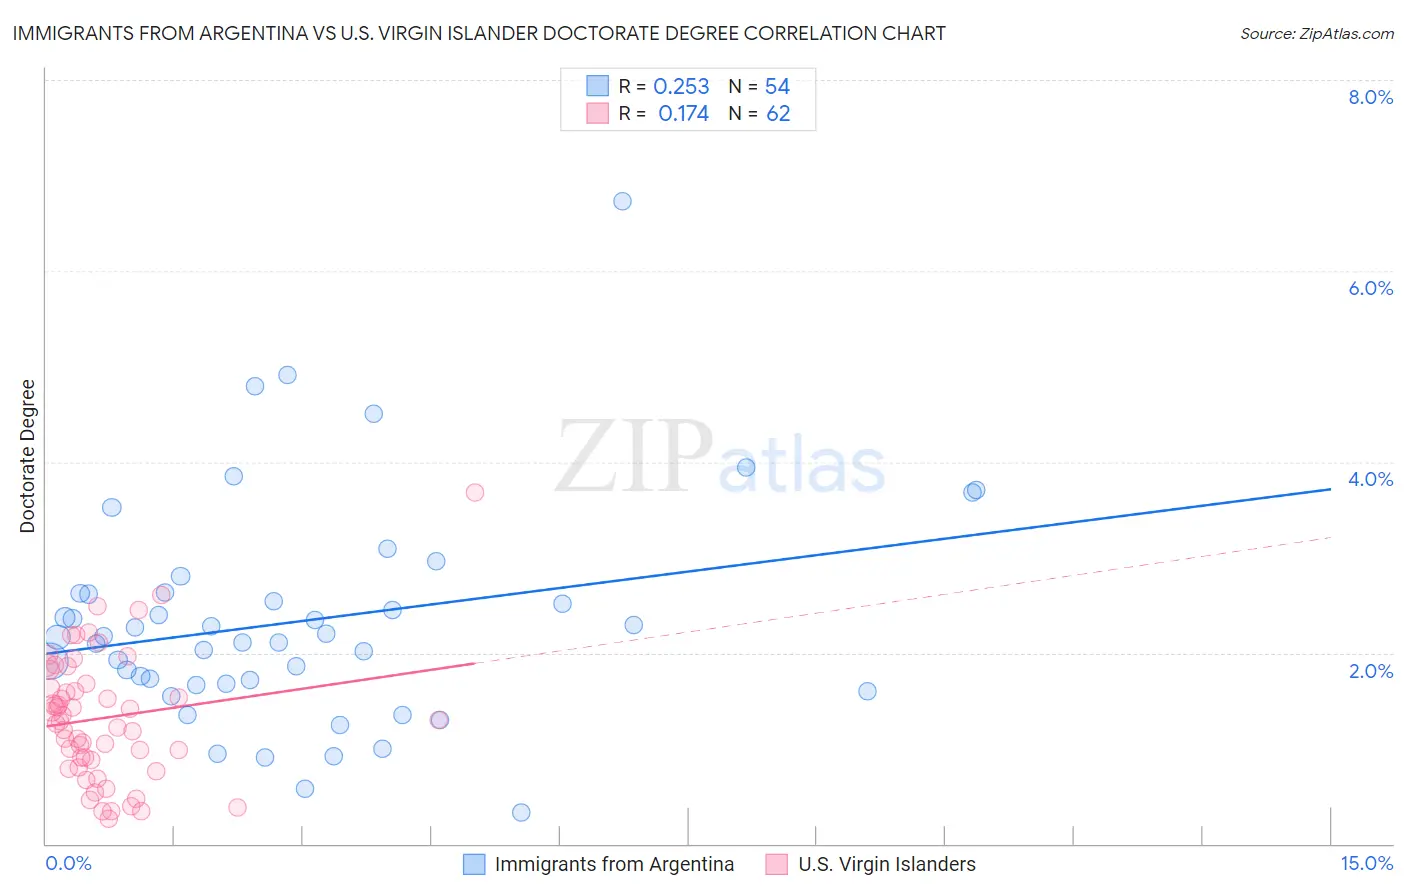 Immigrants from Argentina vs U.S. Virgin Islander Doctorate Degree